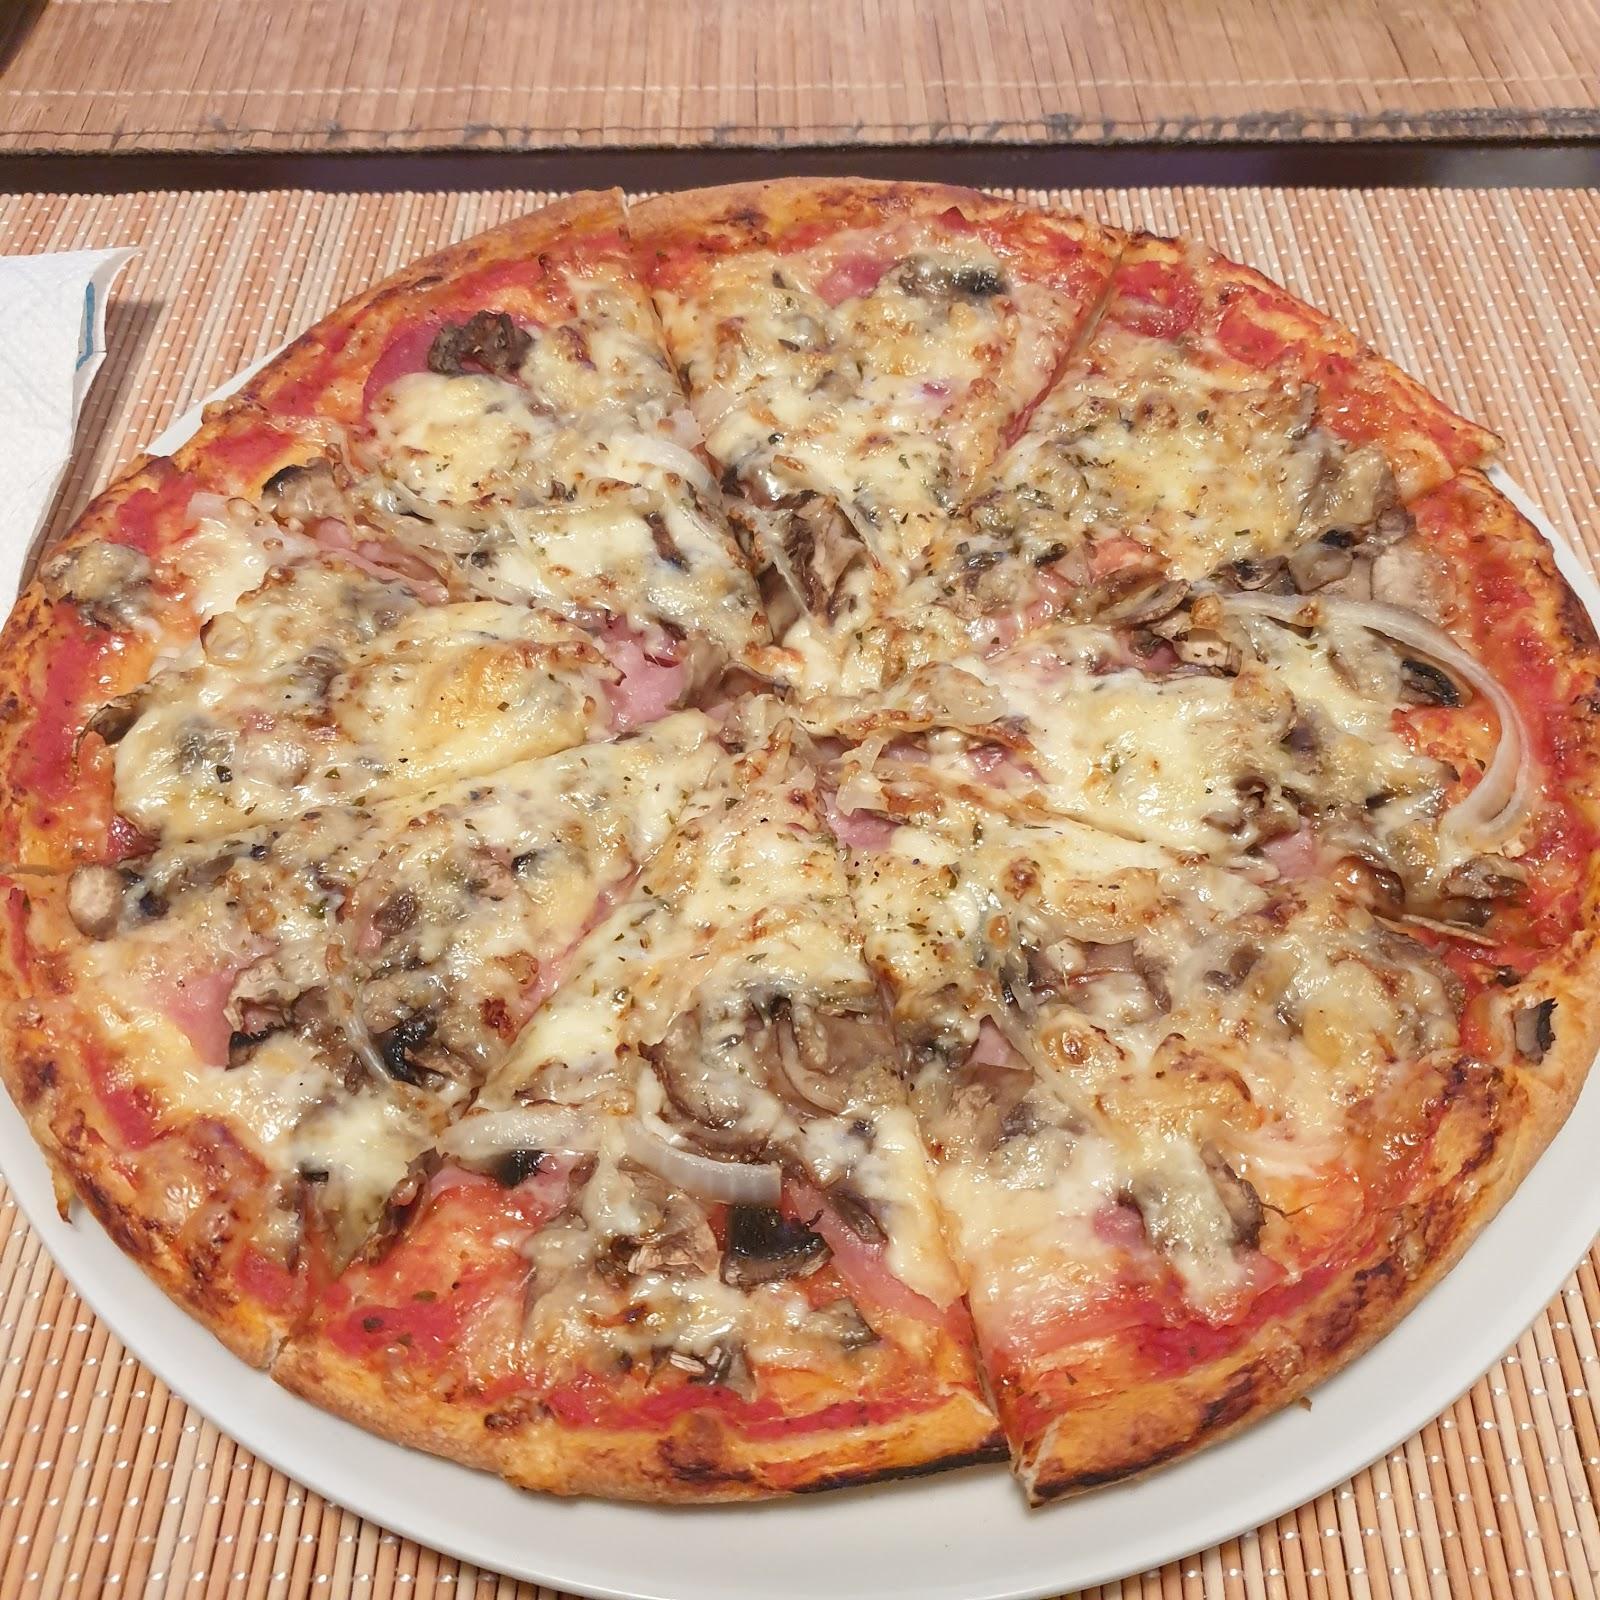 Restaurant "Pizzeria Calimero" in Hanau